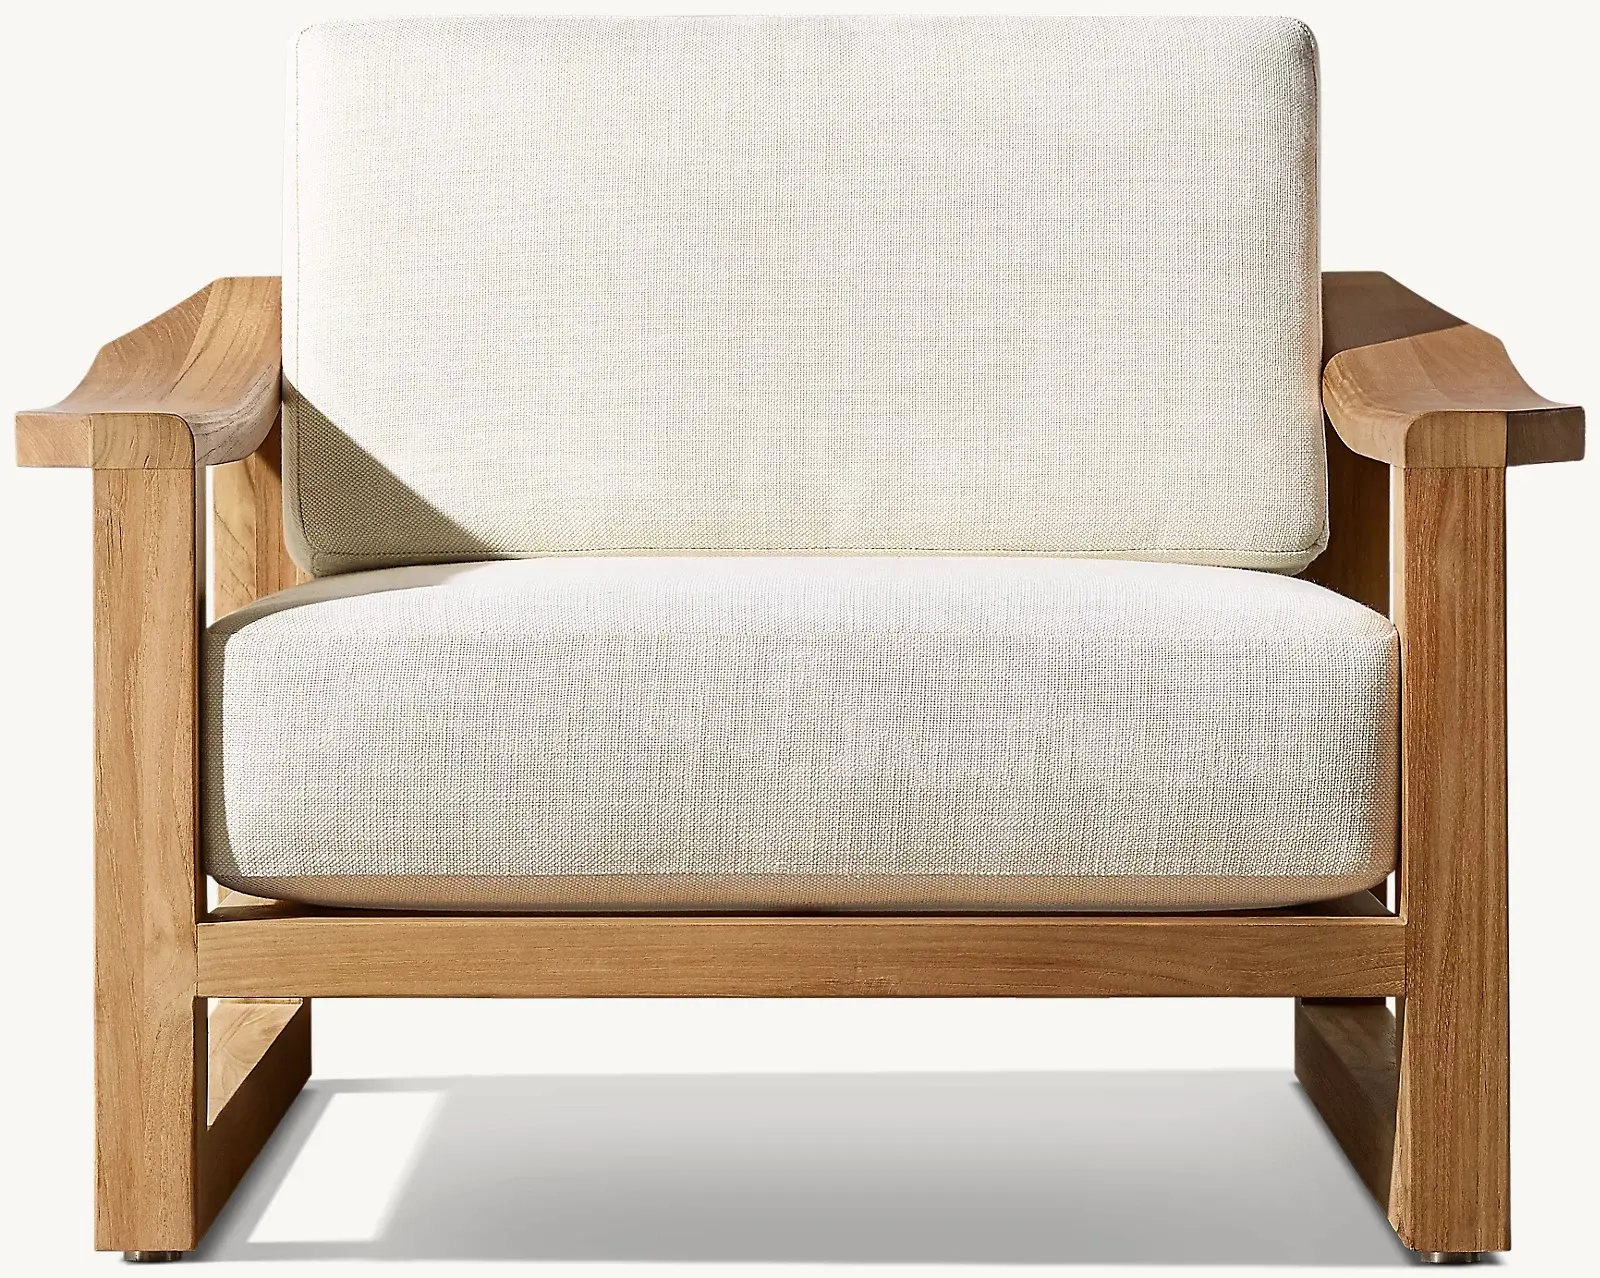 Garten Sofa Stuhl Möbel Teakholz Material natürliche verwitterte Farbe Finish modernen Stil Outdoor Sofa Stuhl Möbel